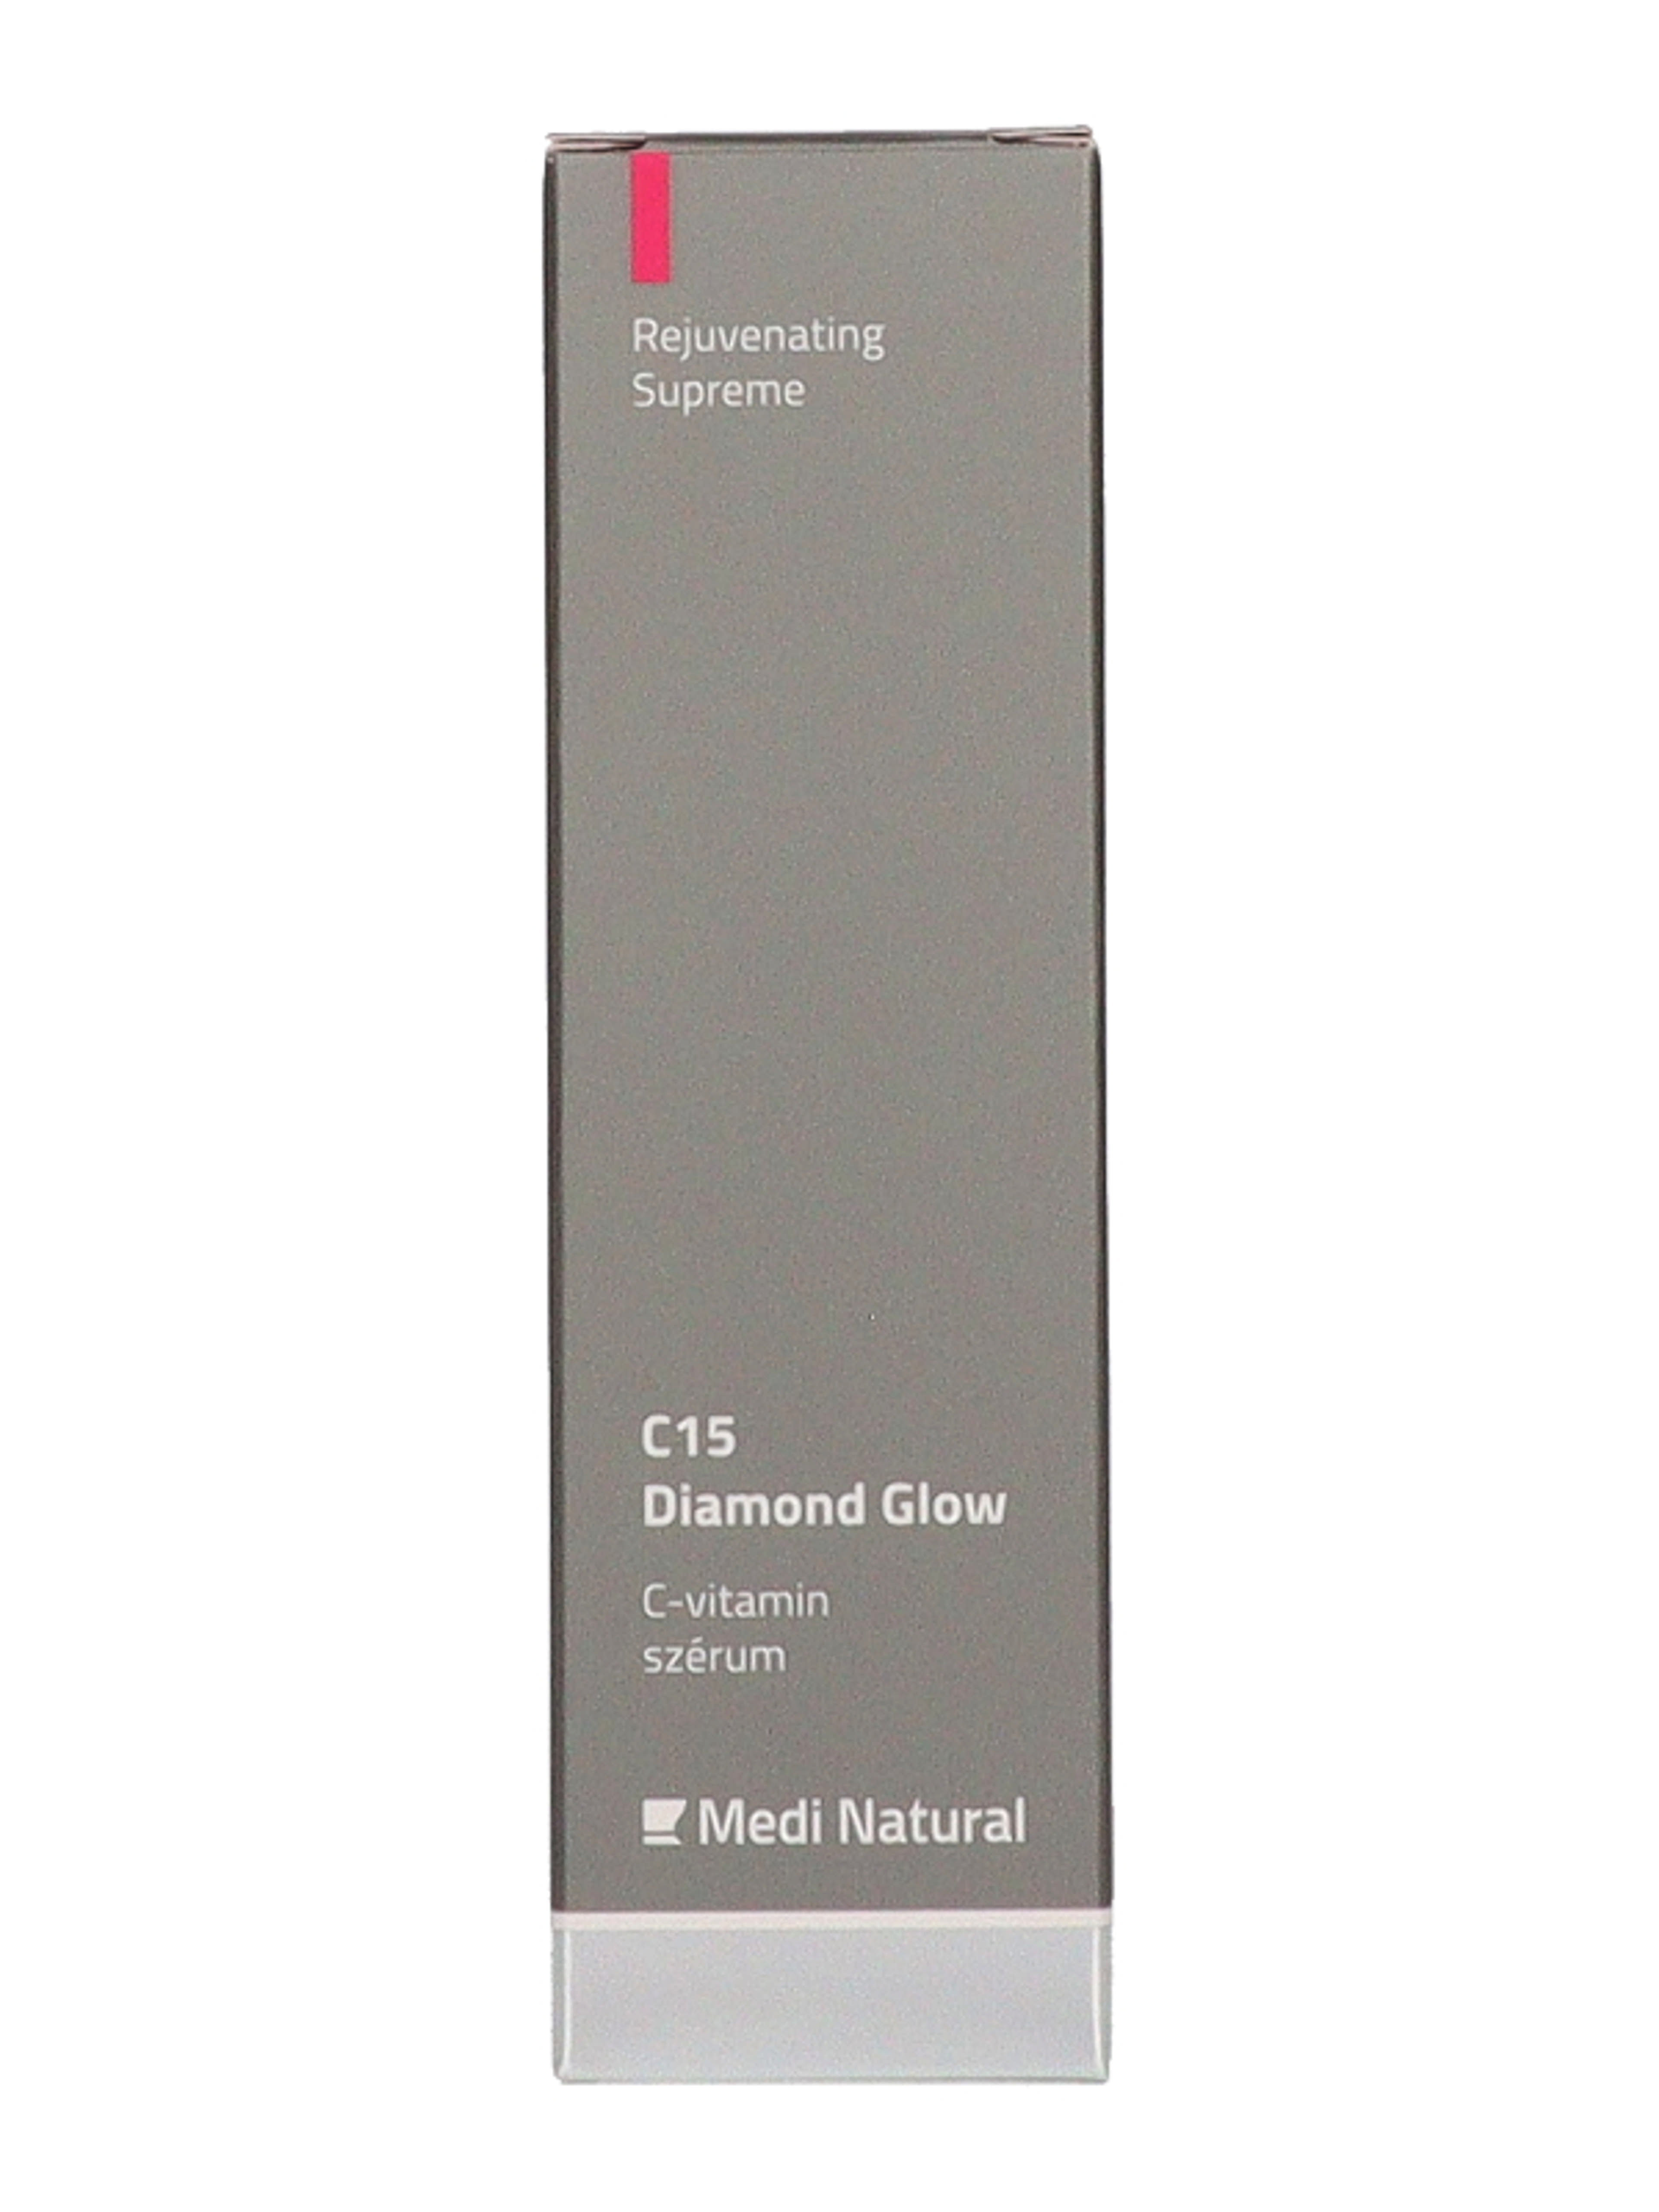 Meid Natural C15 Diamond Glow C-vitamin szérum - 30 ml